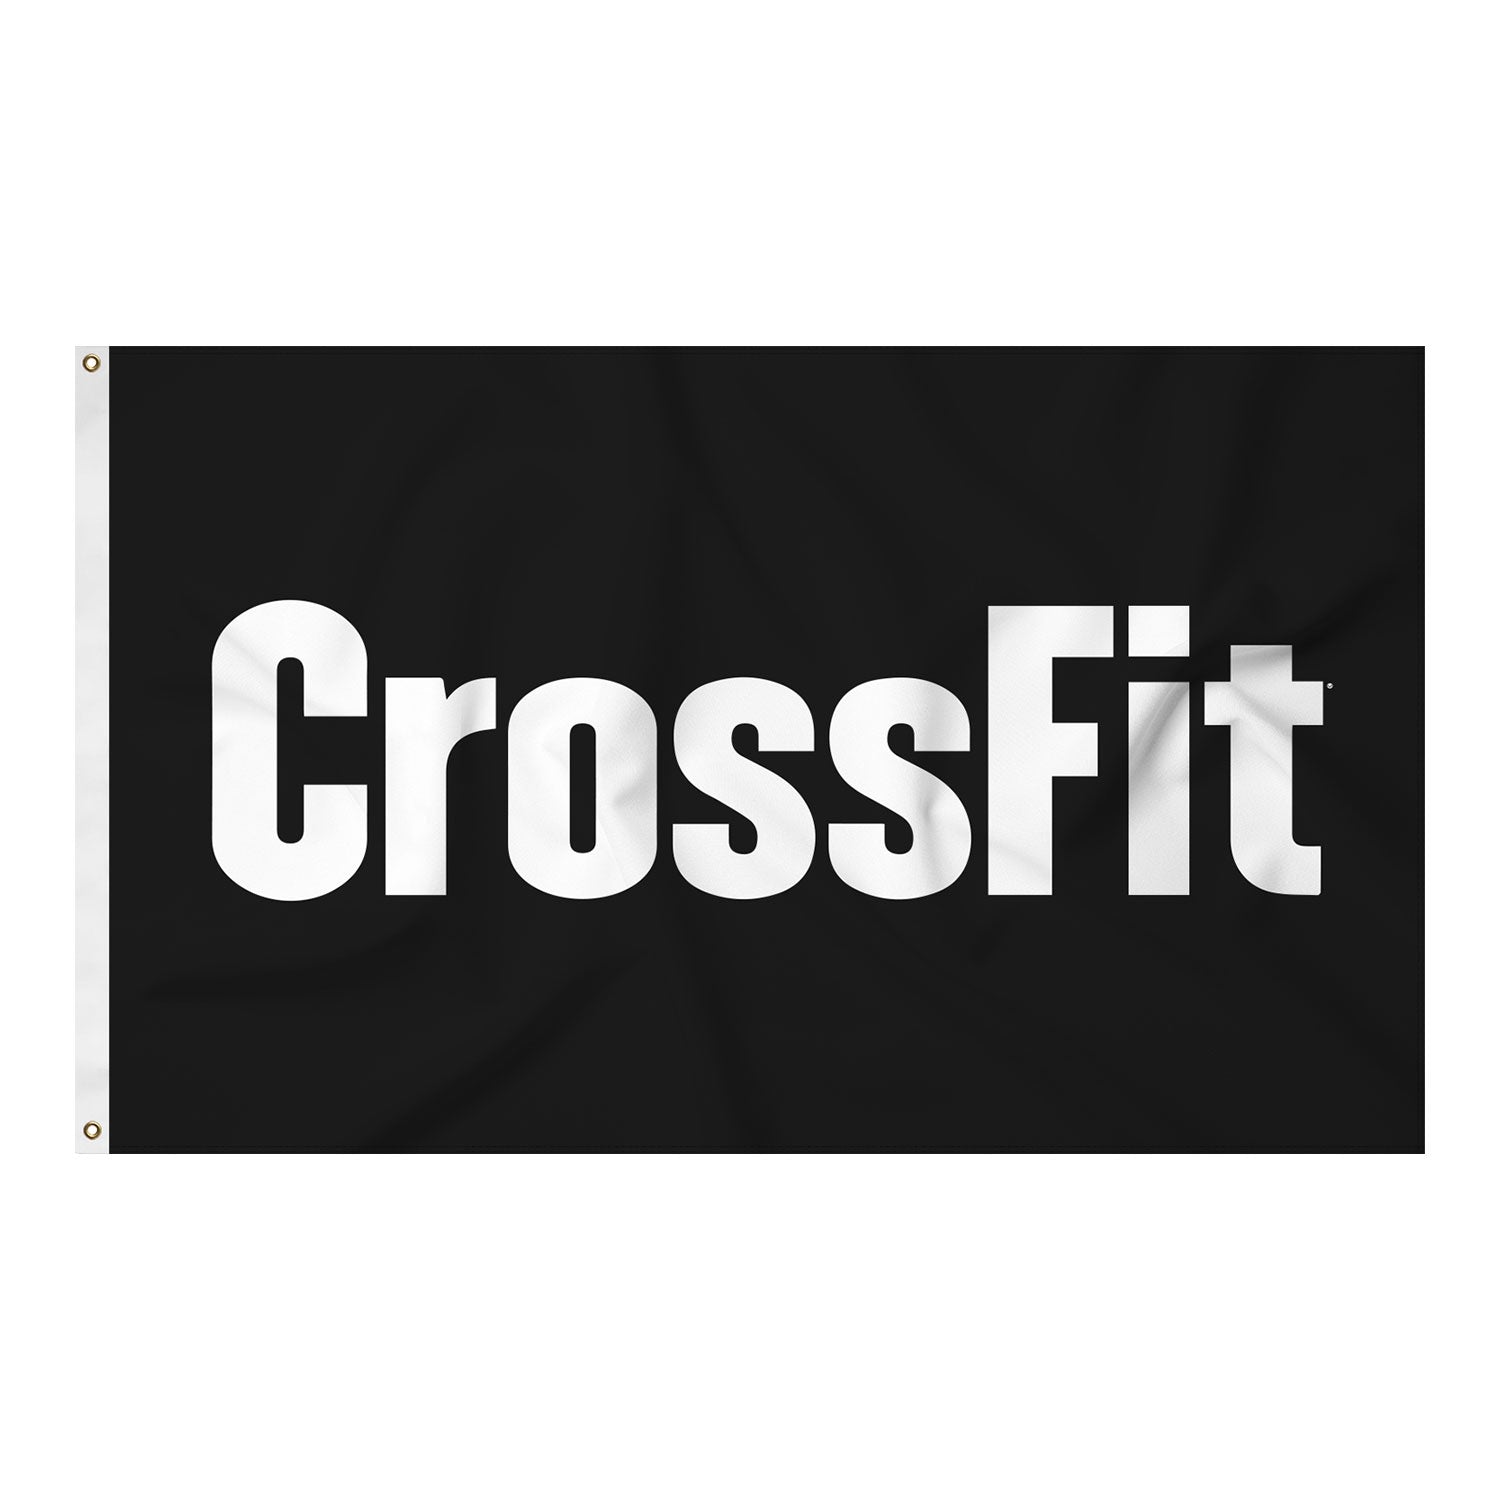 CrossFit 3' x 5' Flag - Black